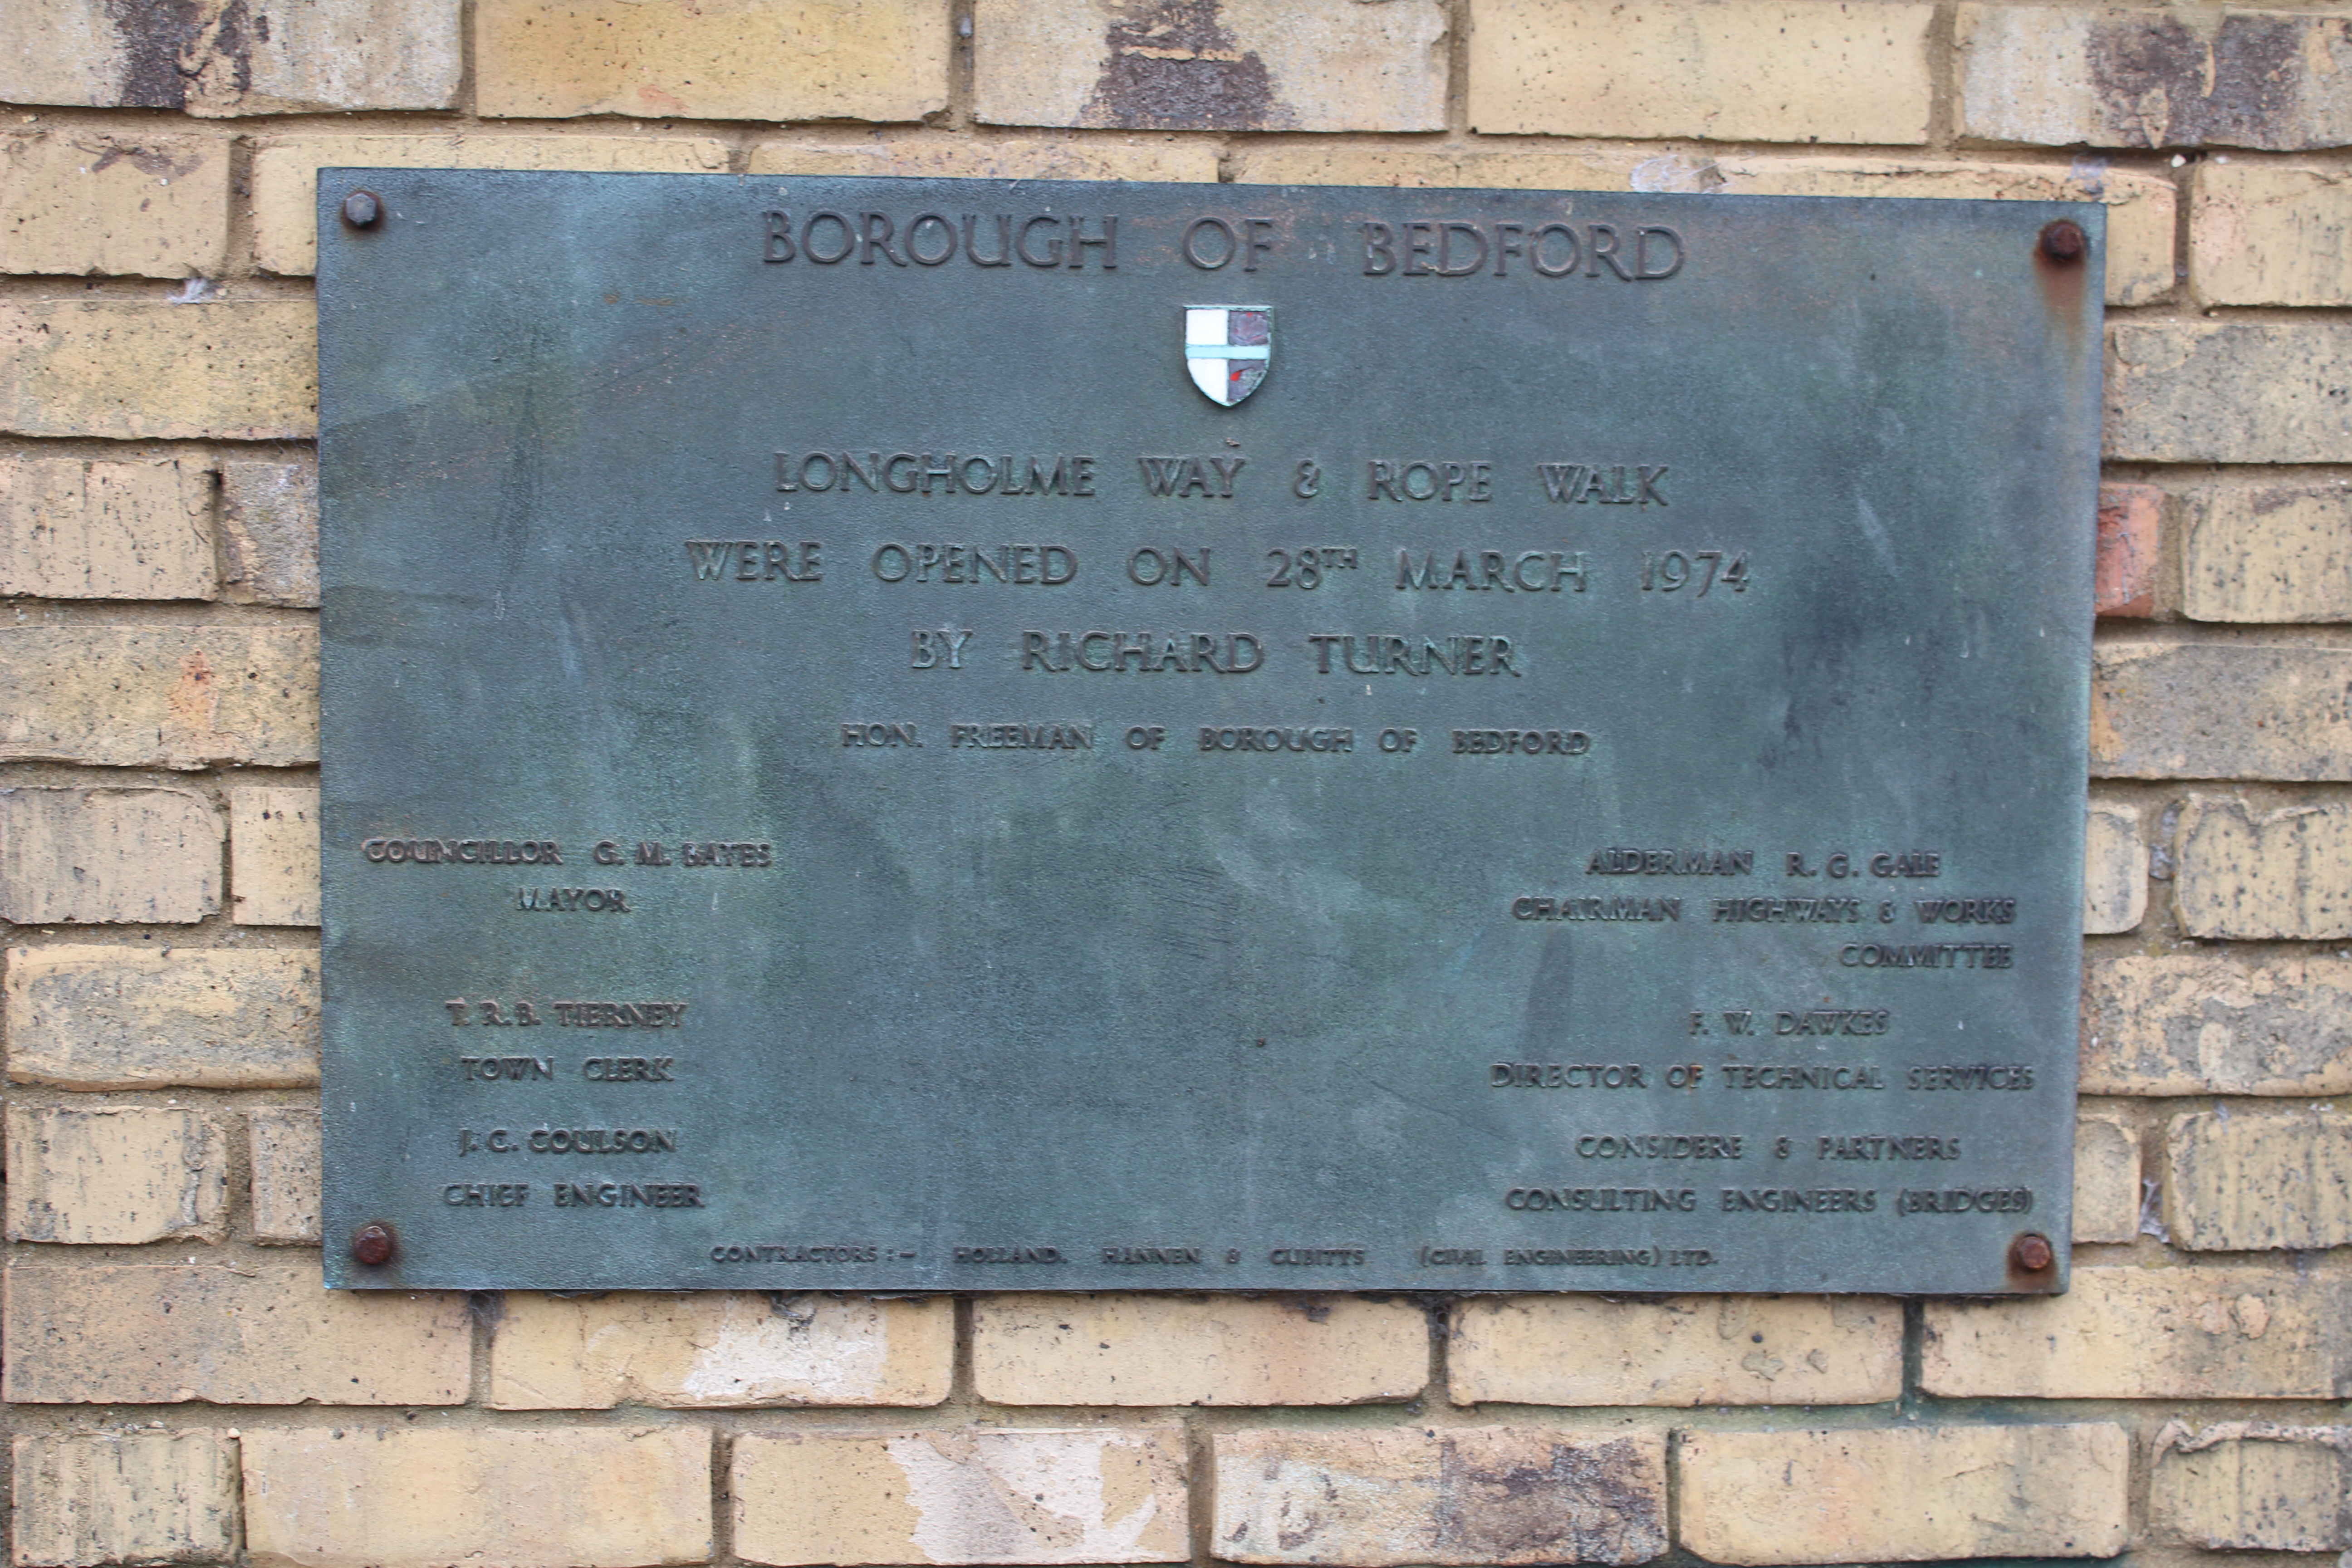 Longholme Way and Rope Walk commemorative plaque 1974